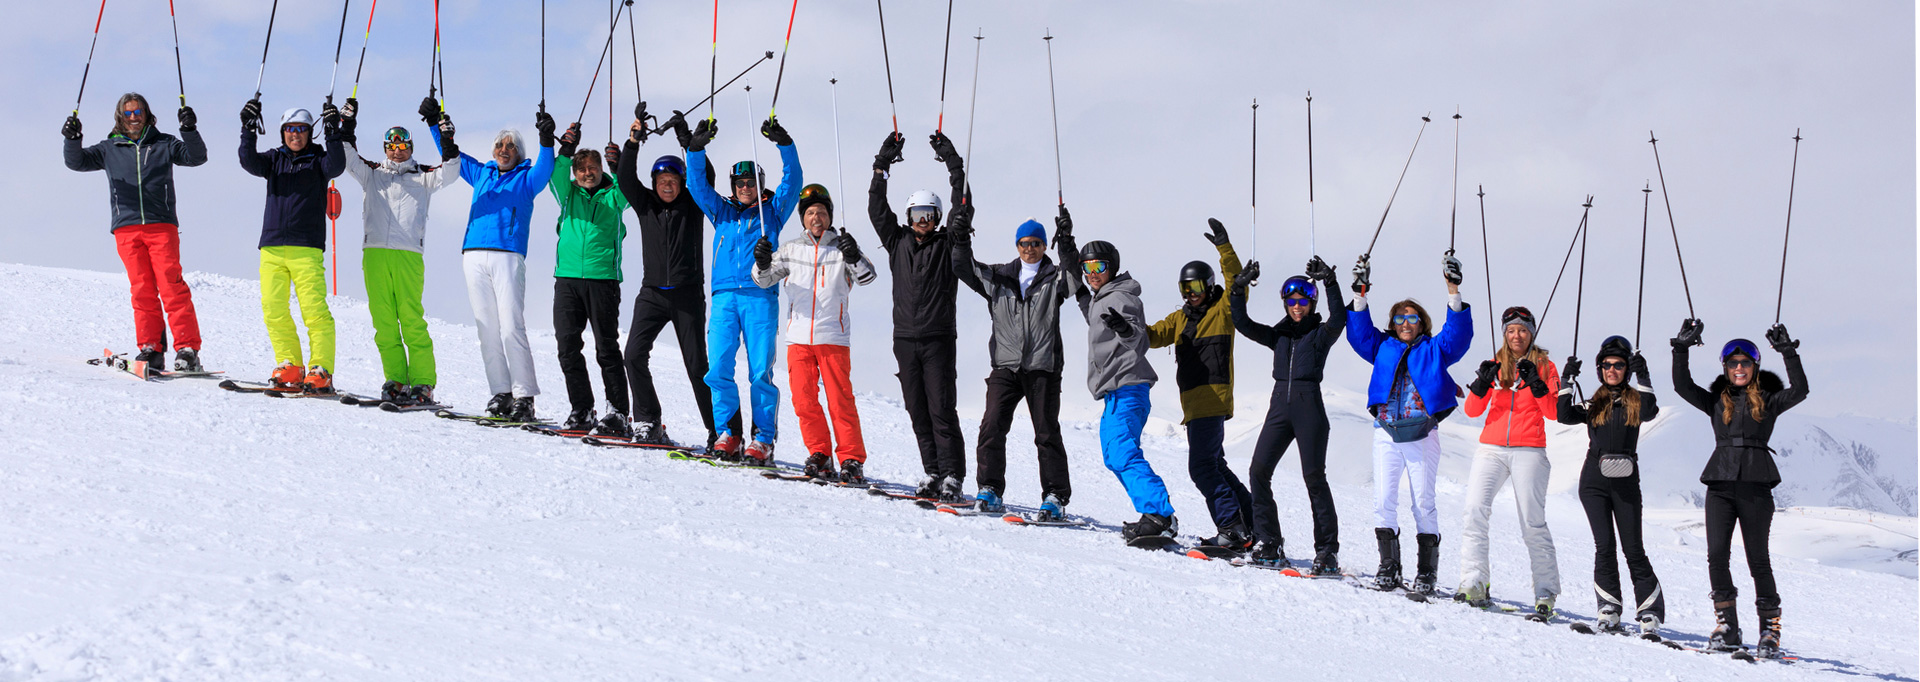 group of people on ski mountain